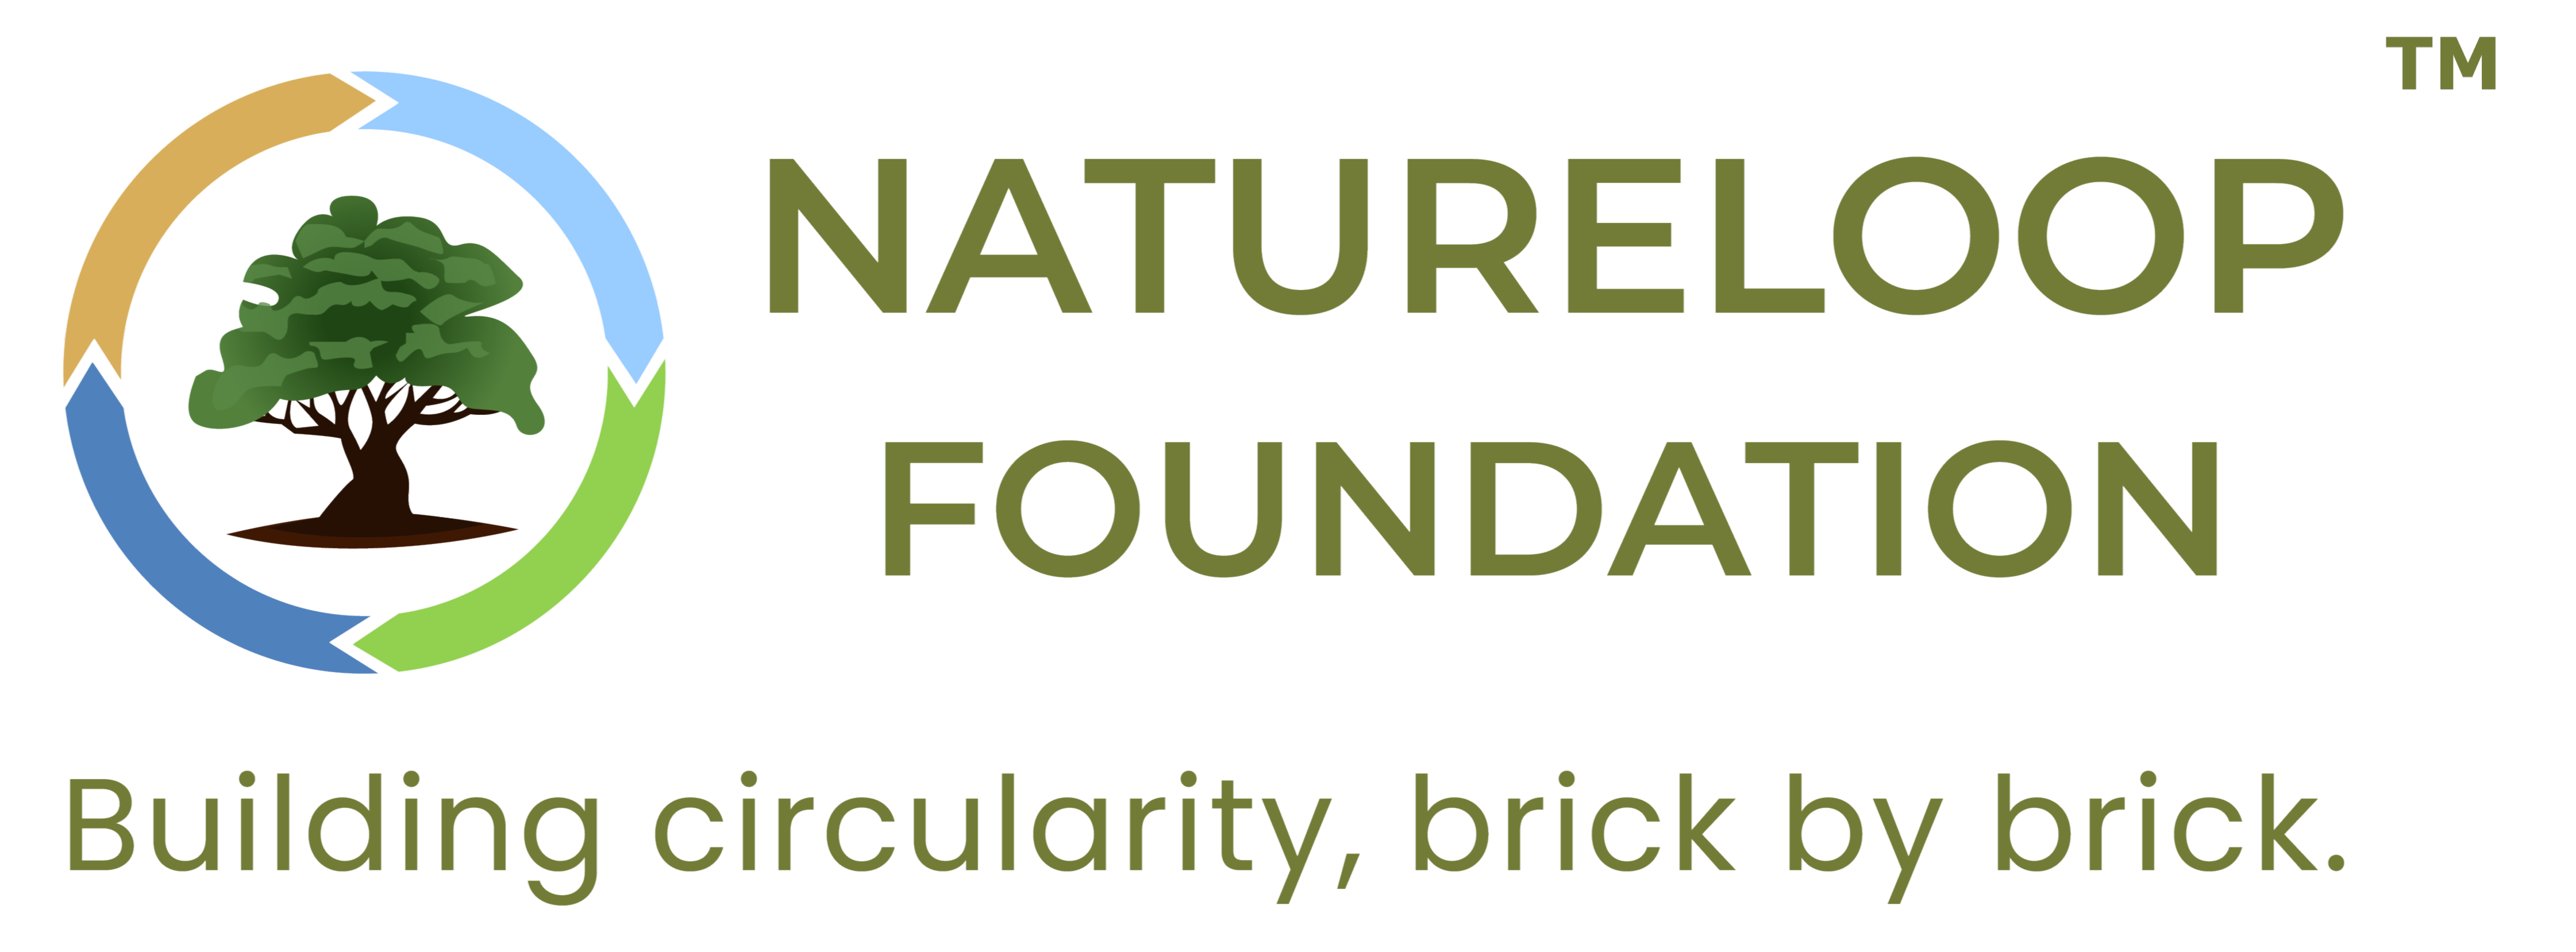 NatureLoop Logo and Tagline